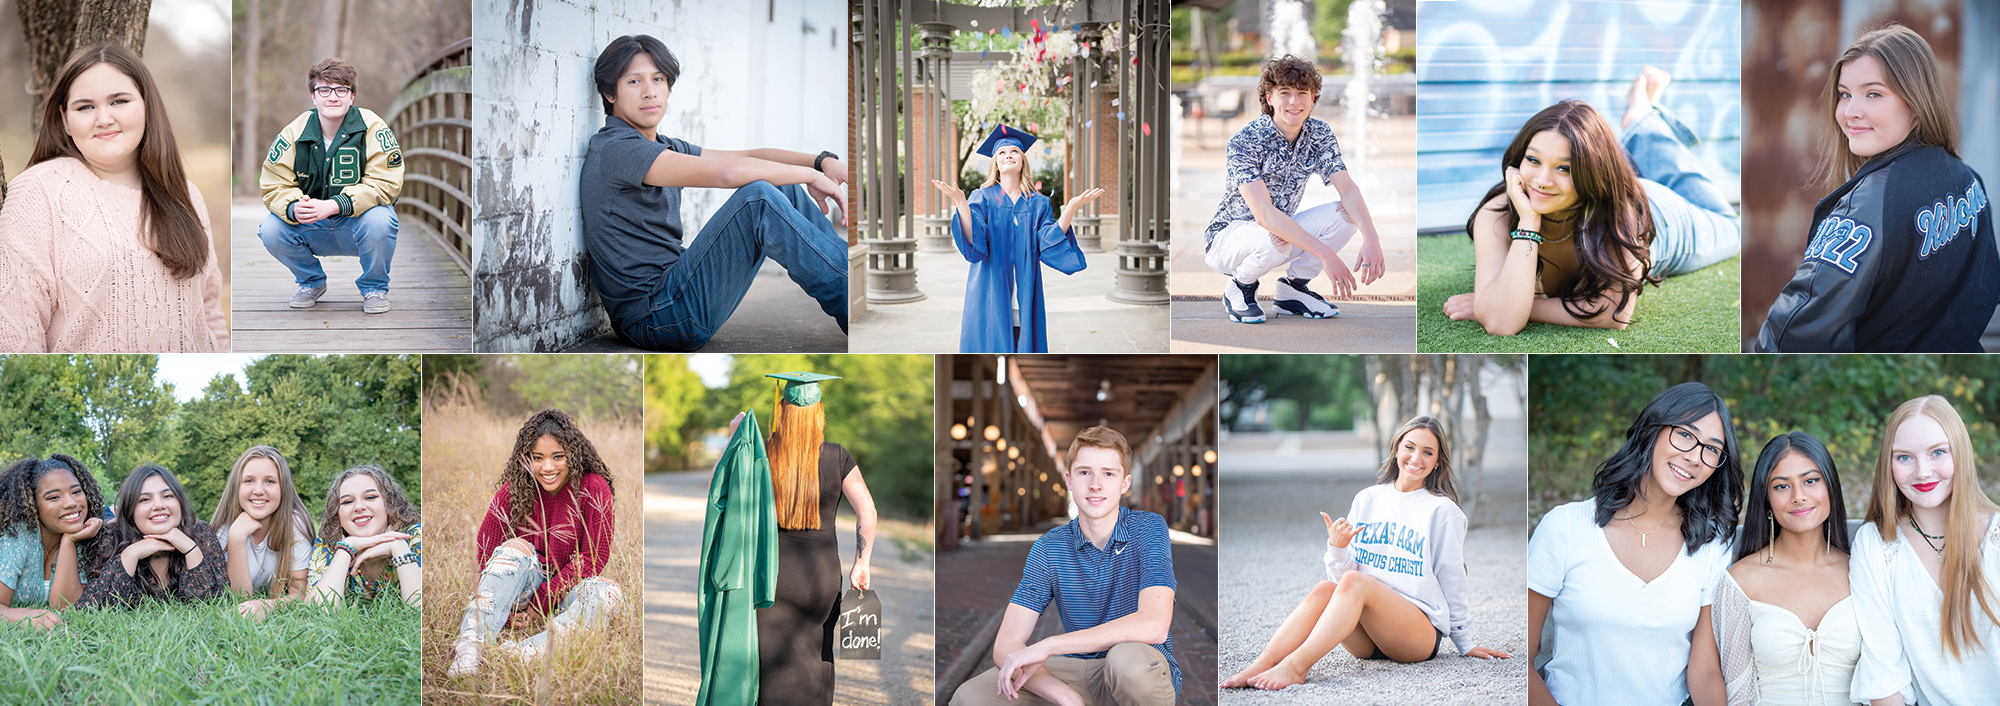 Senior photo collage